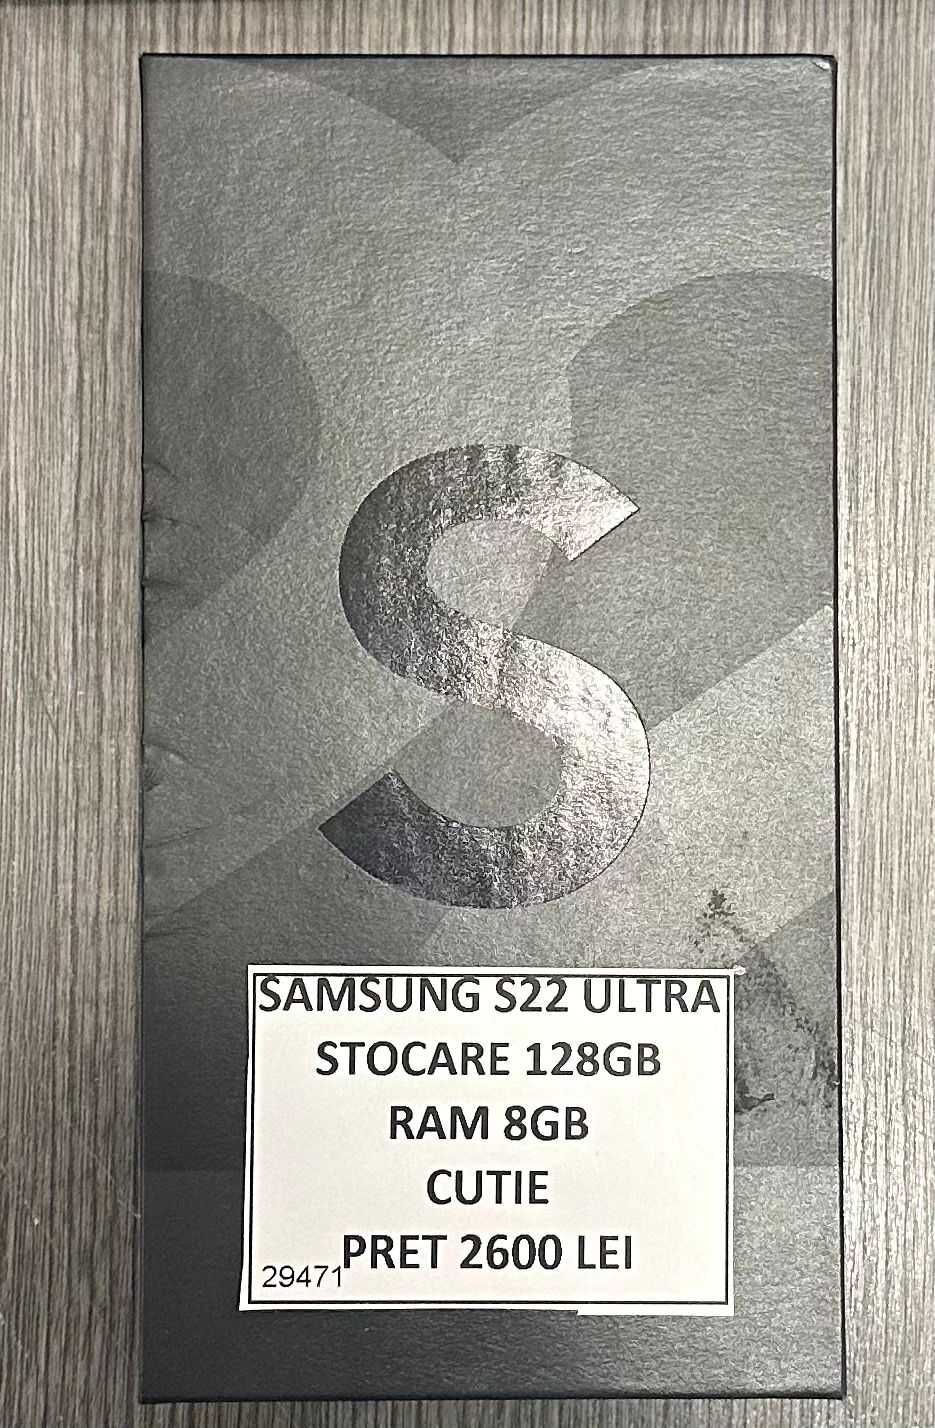 Hope Amanet P4 Samsung S22 Ultra / Cutie / 128GB